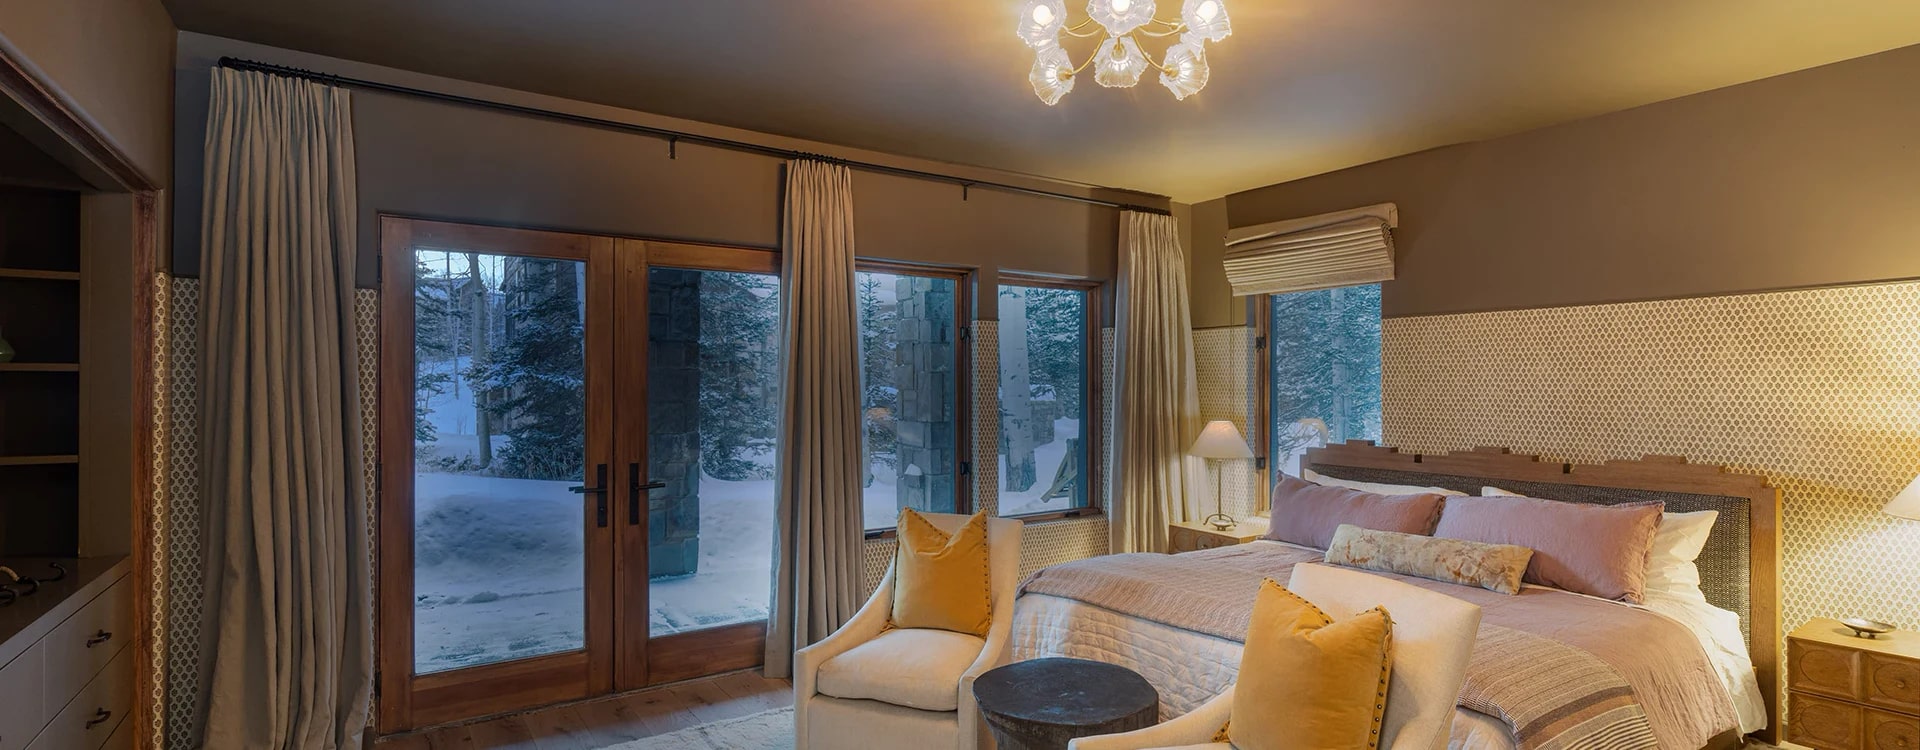 6-peaceful-easy-feeling-mountain-village-guest-suite.webp